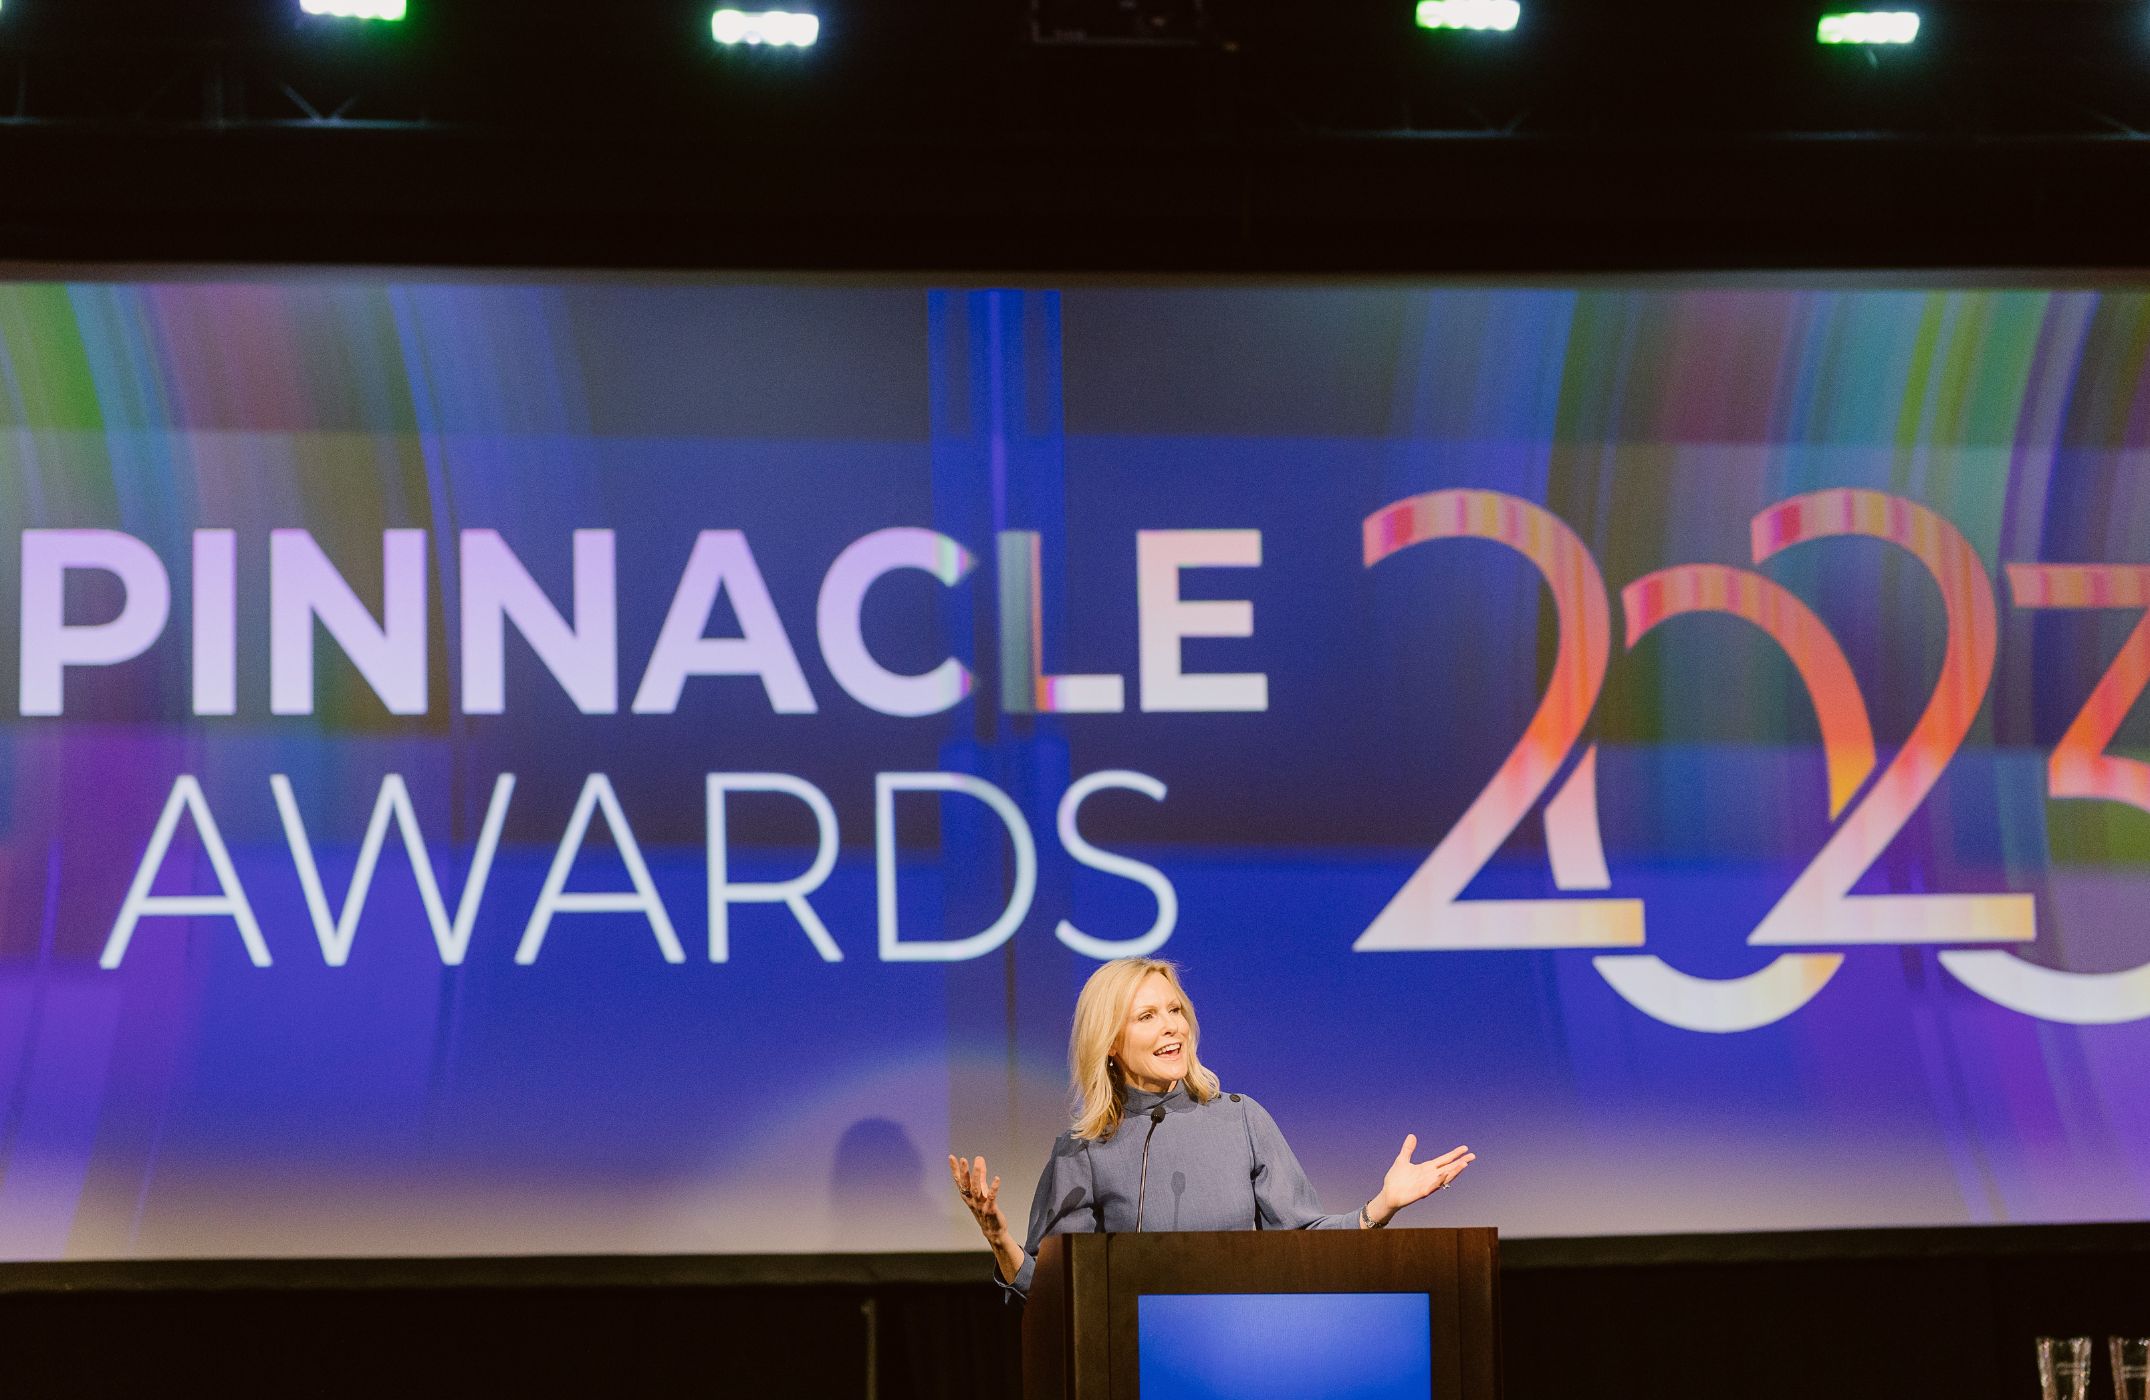 Pinnacle Awards 2023